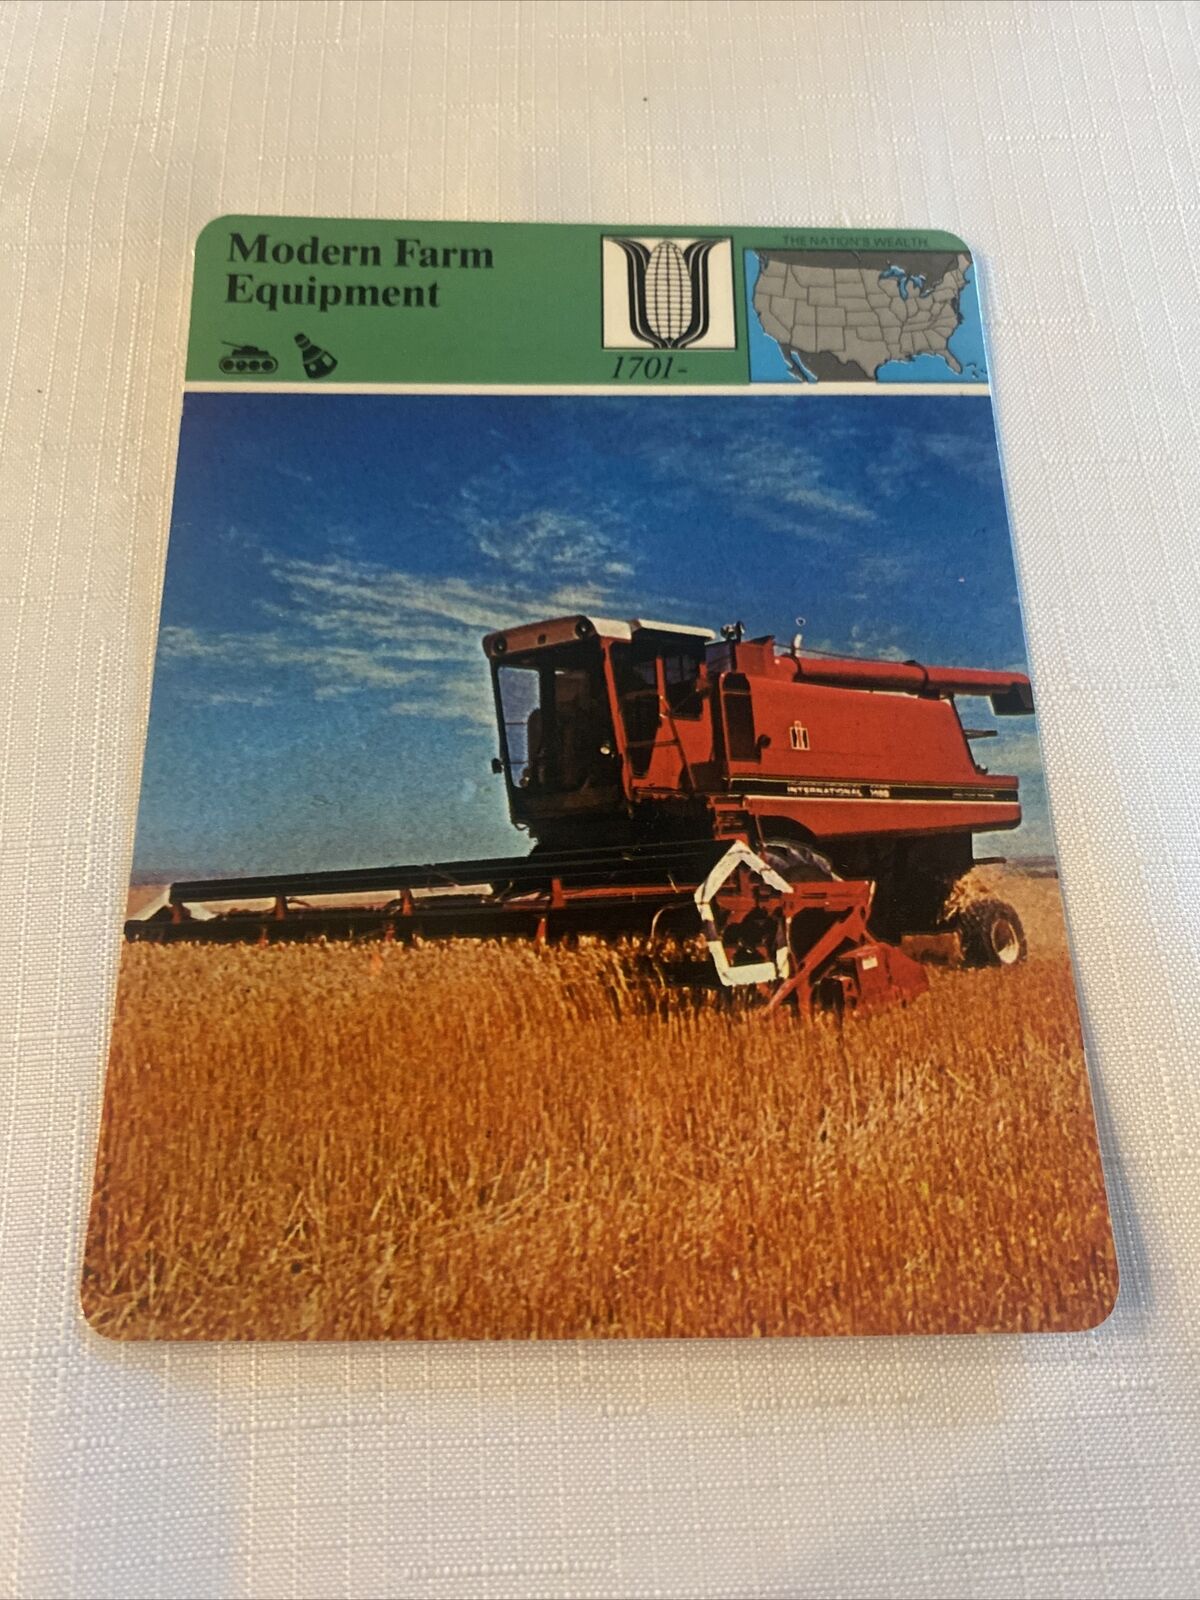 1981 panarizon modern farm equipment learning card laminated